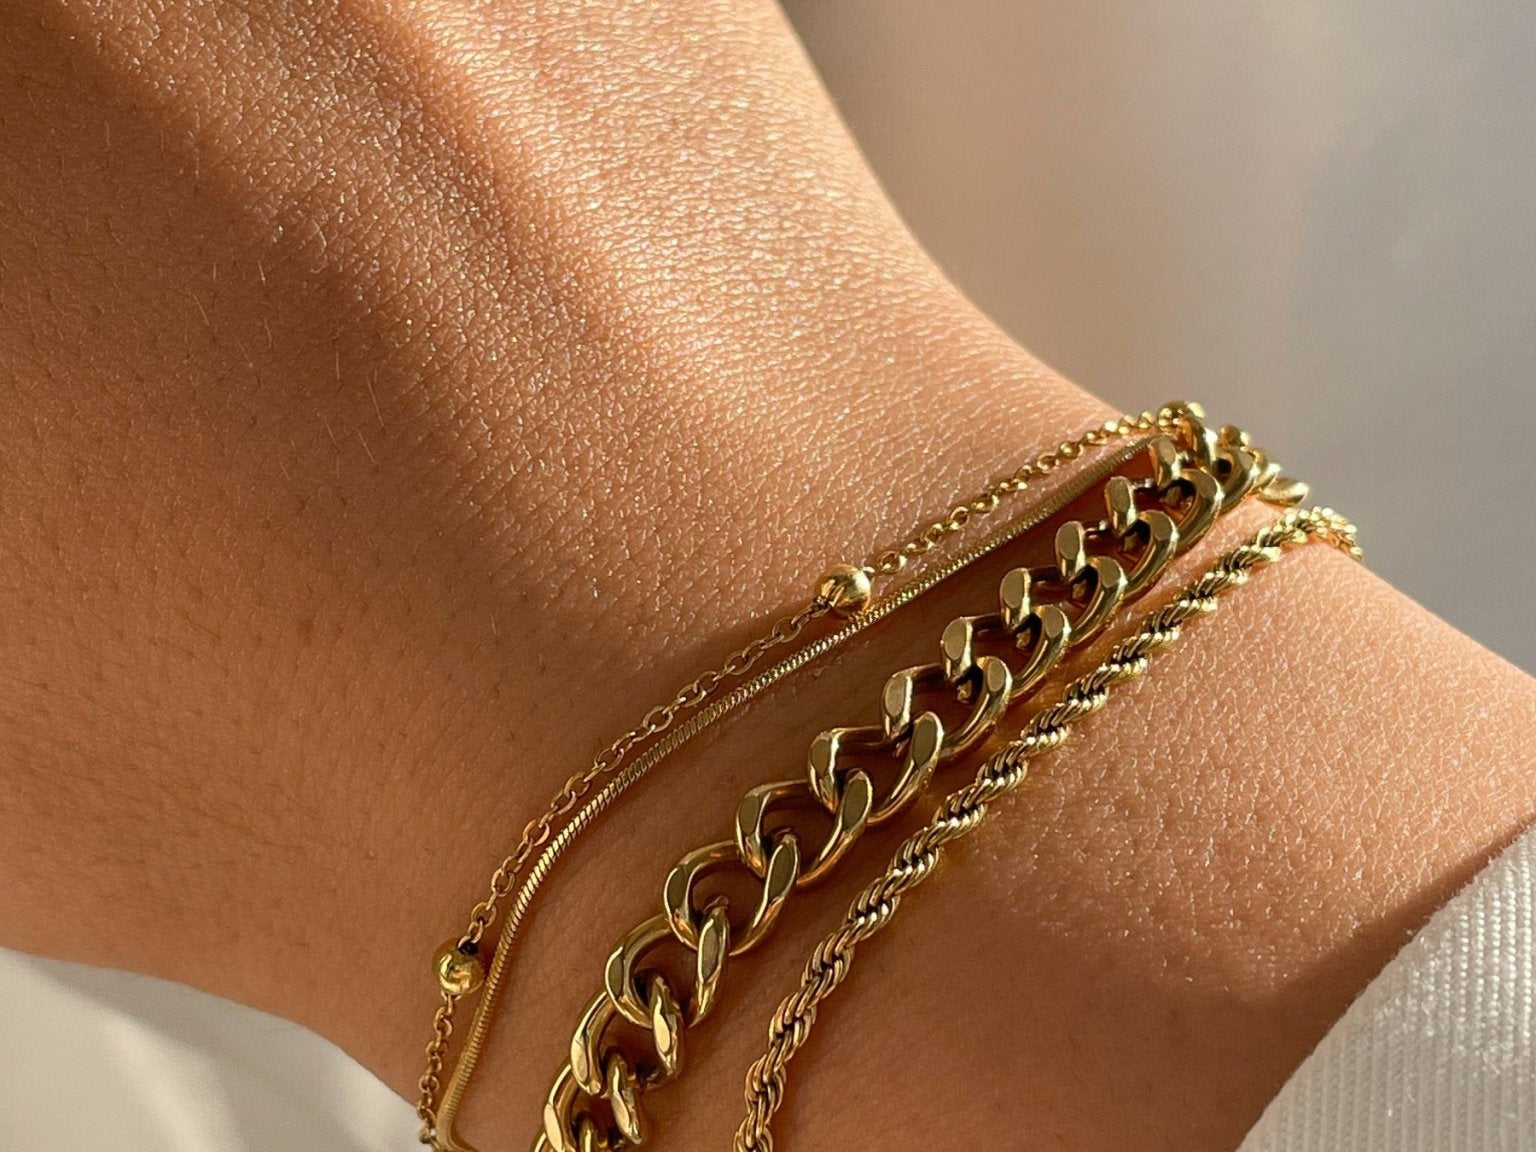 Mimi Layered Gold Bracelet by Koréil Jewelry